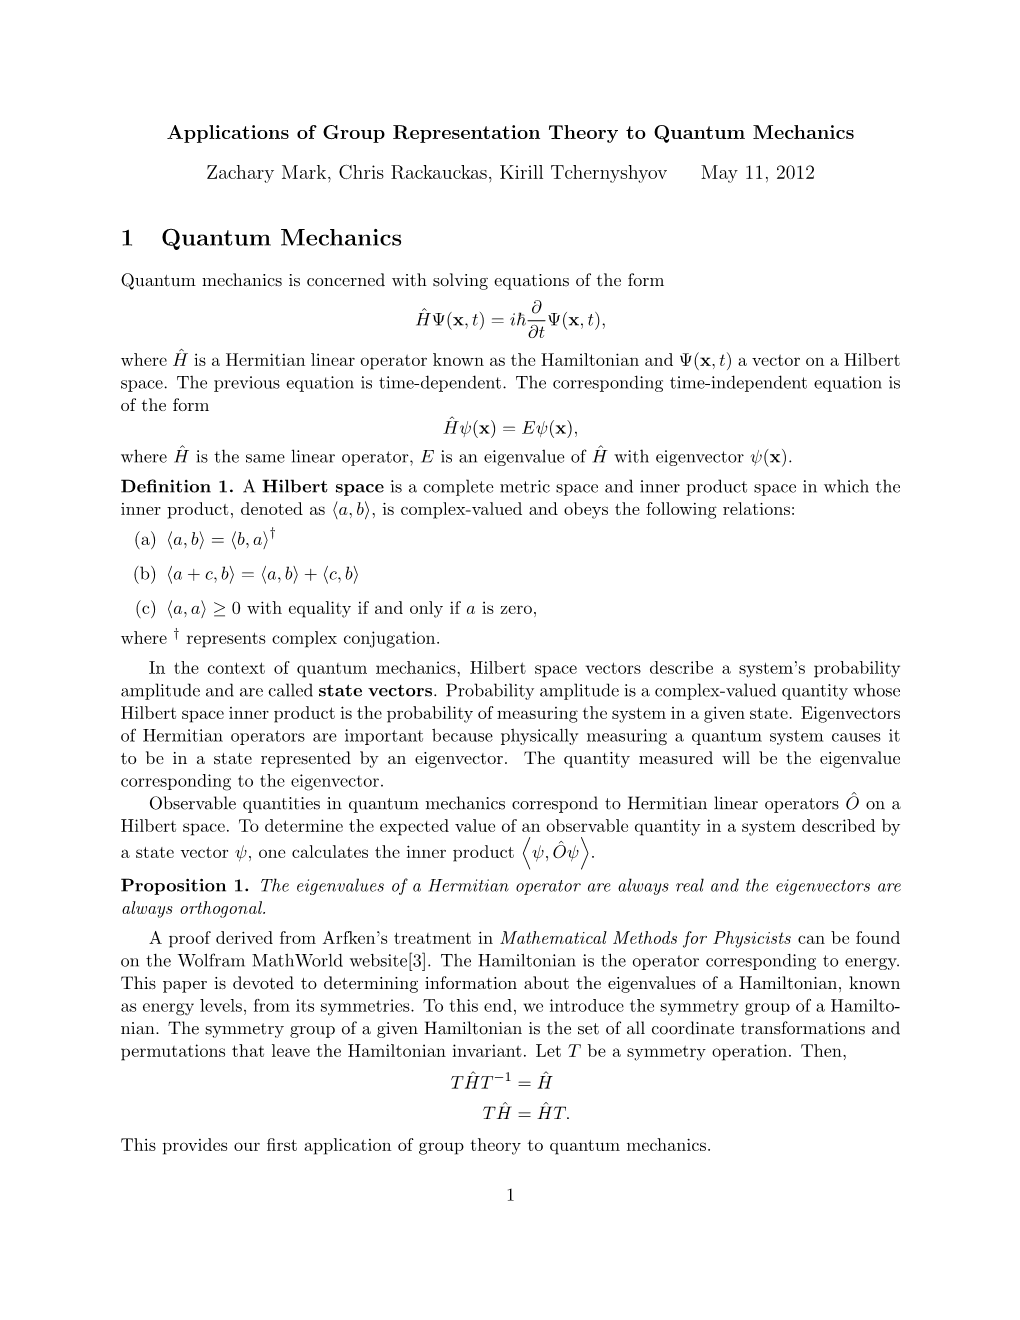 Applications of Group Representation Theory to Quantum Mechanics Zachary Mark, Chris Rackauckas, Kirill Tchernyshyov May 11, 2012